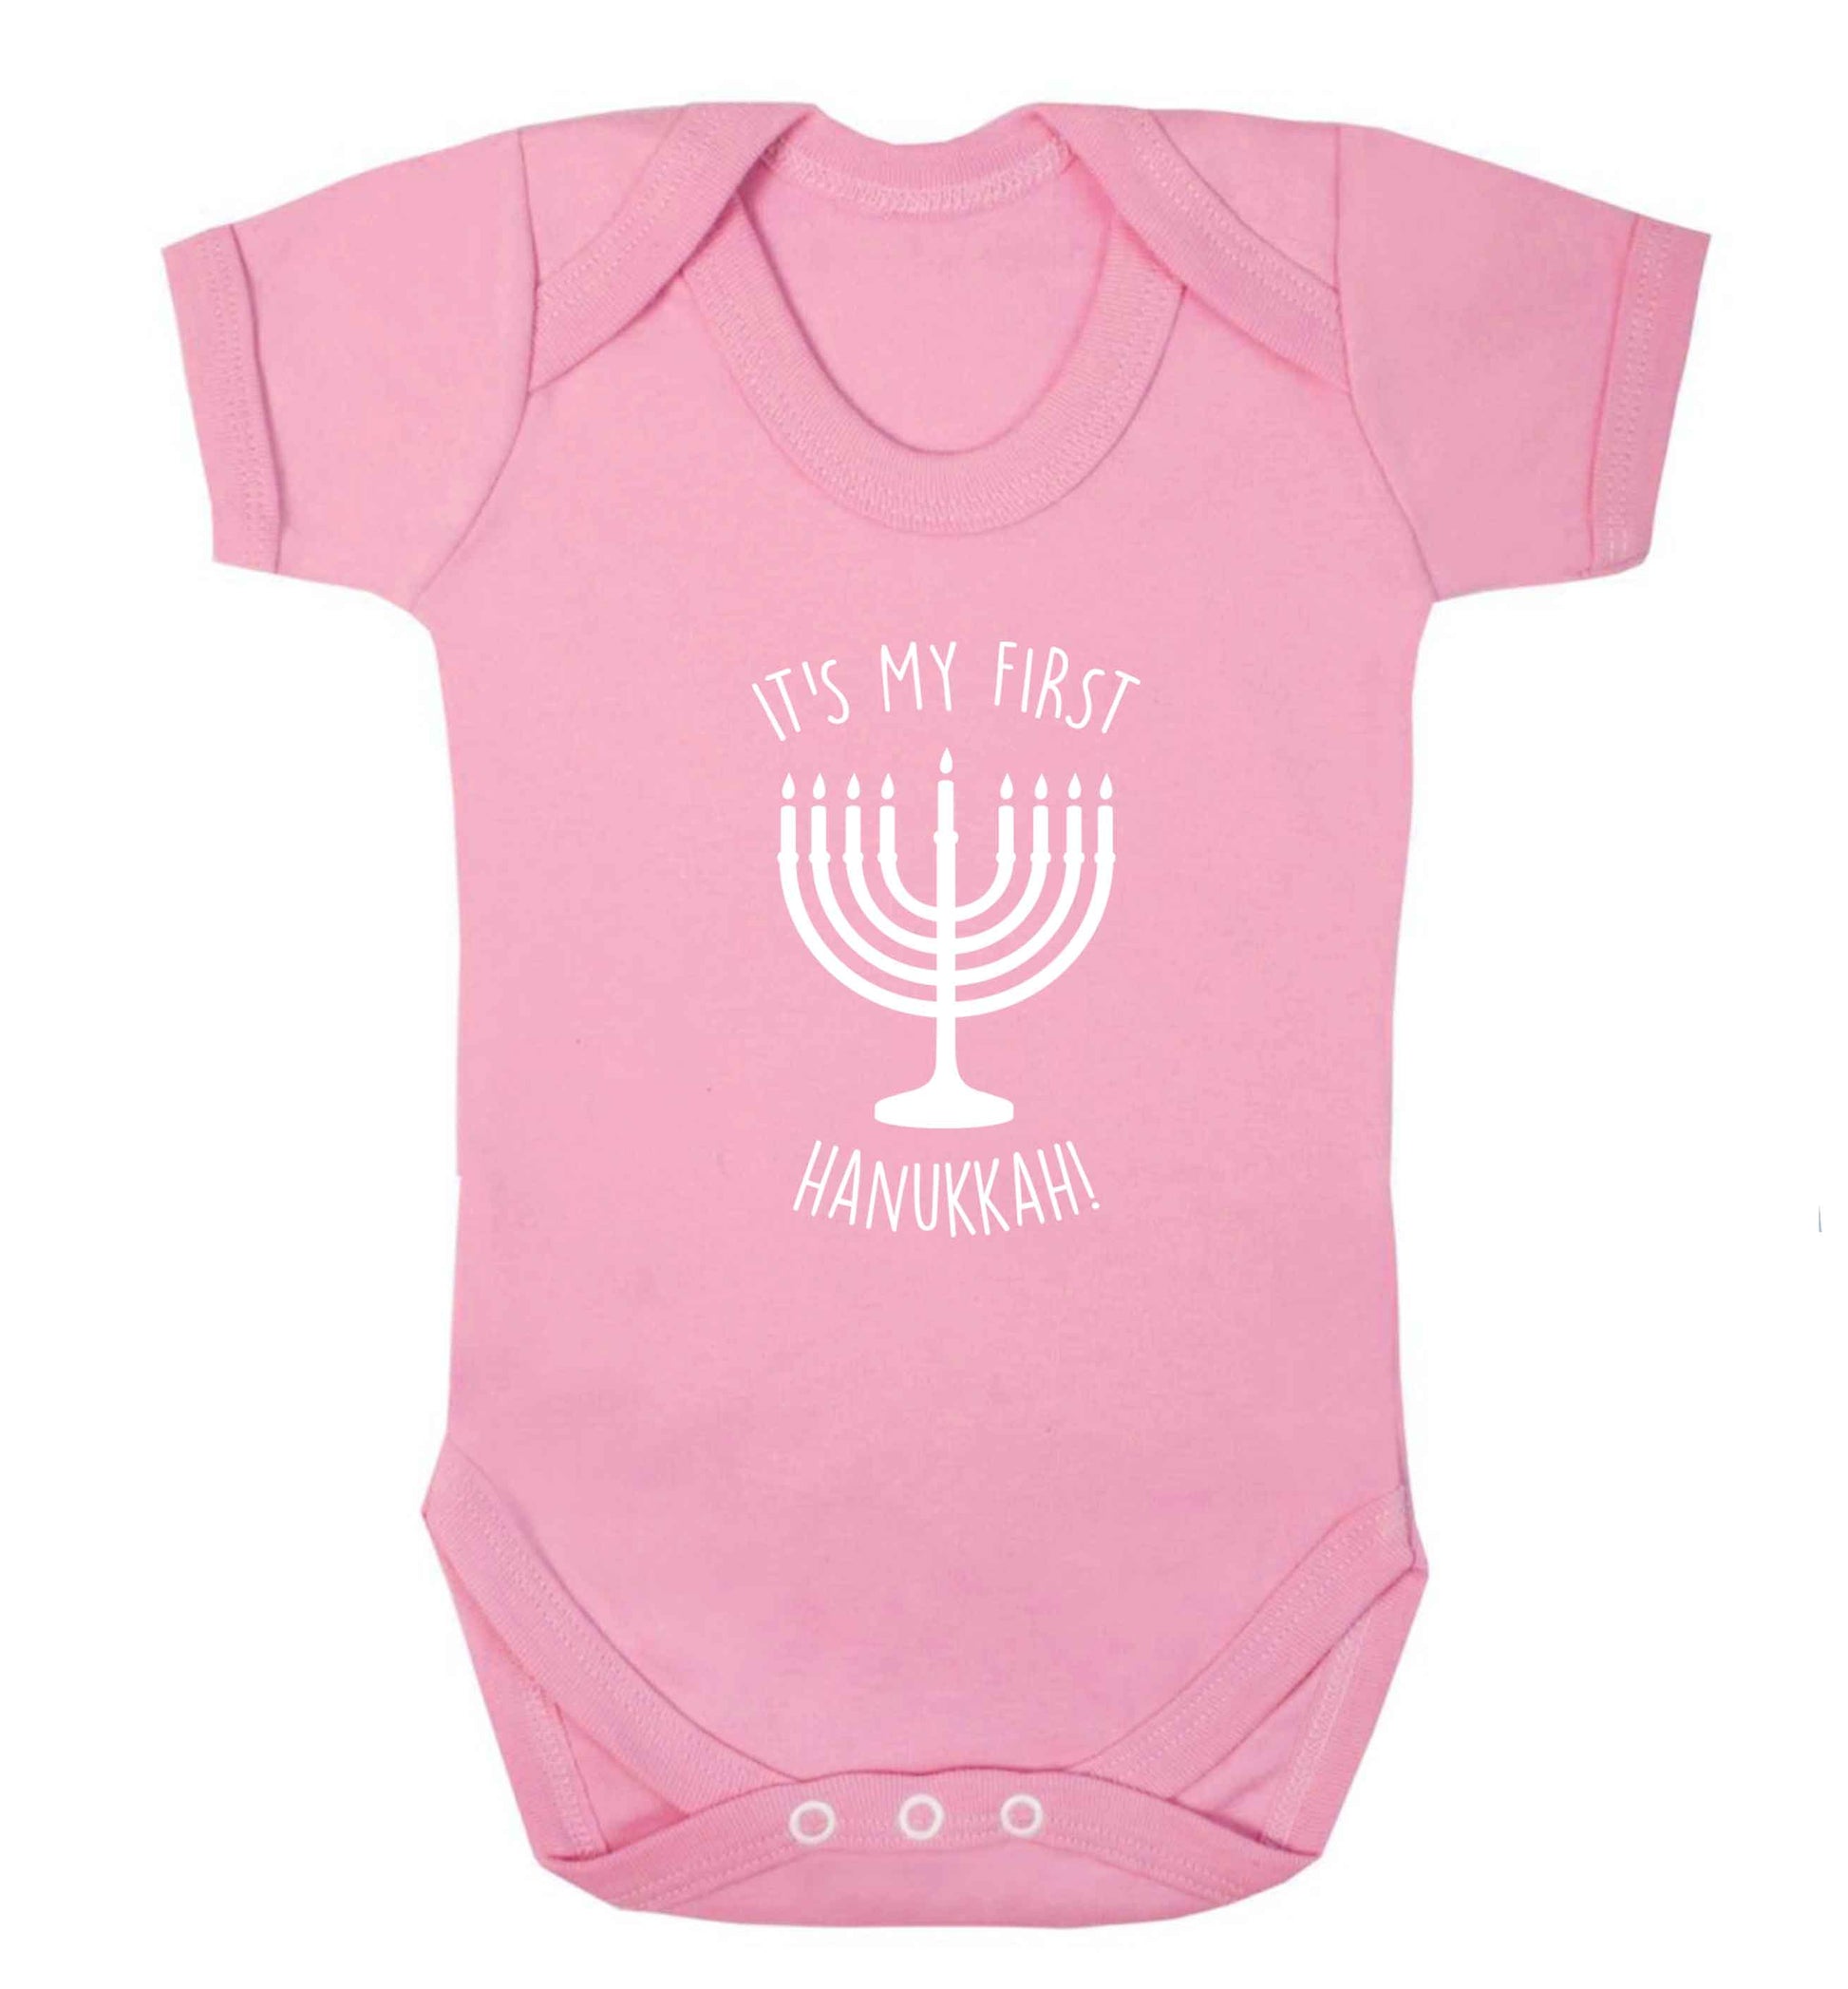 It's my first hanukkah baby vest pale pink 18-24 months